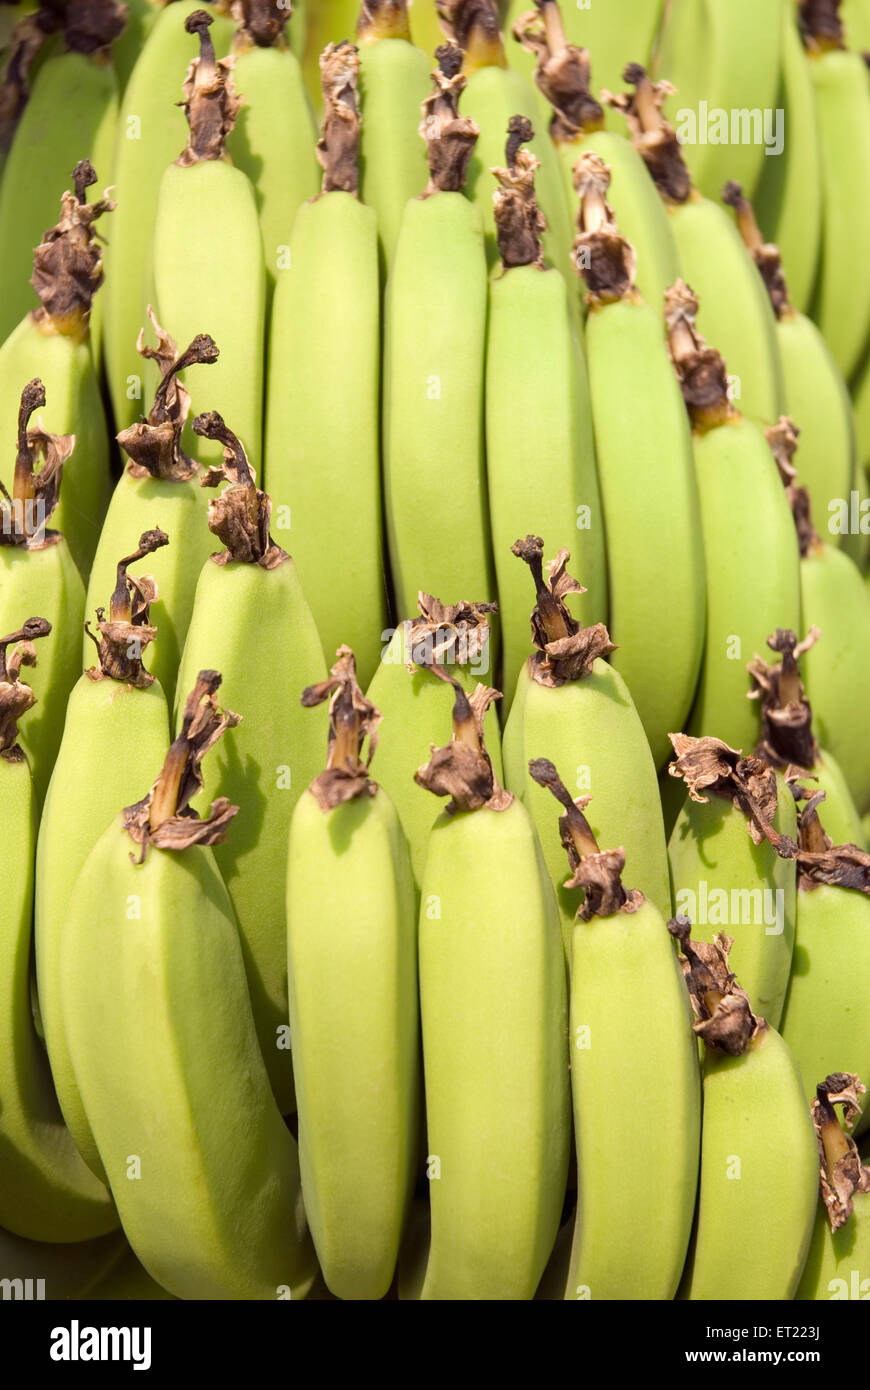 Fruits and vegetables ; unripe bananas ; Khidrapur ; District Kolhapur ; Maharashtra ; India Stock Photo